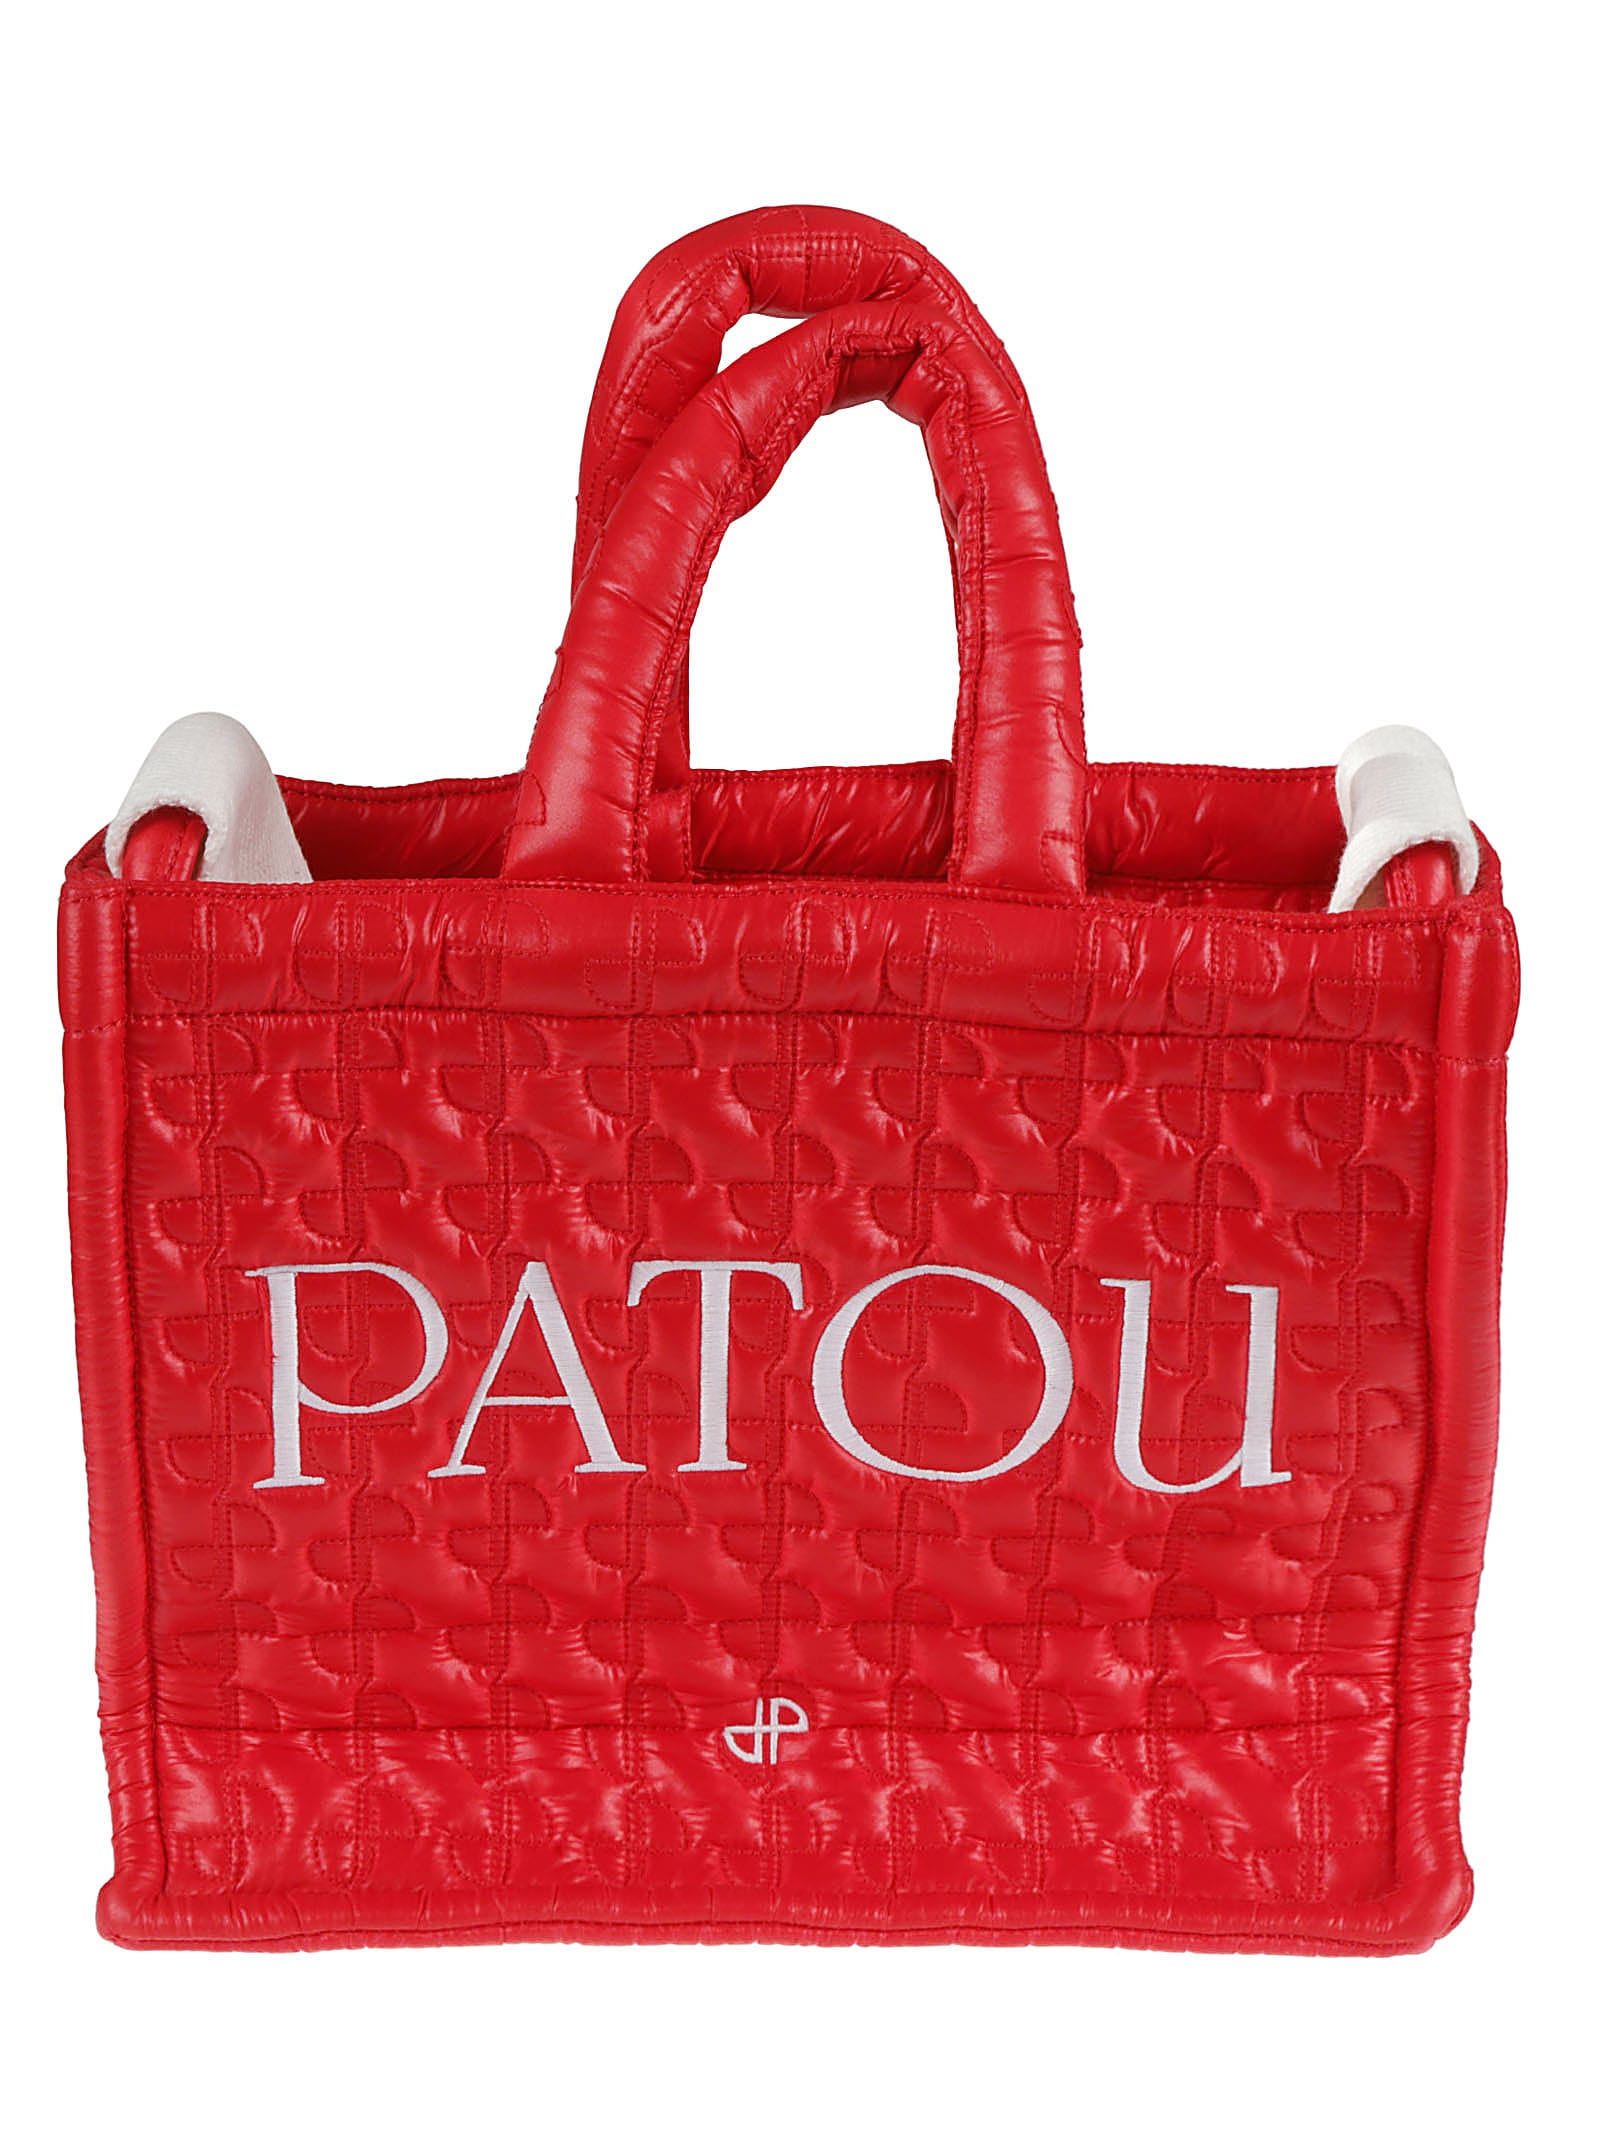 Patou Logo Detail Tote In Red